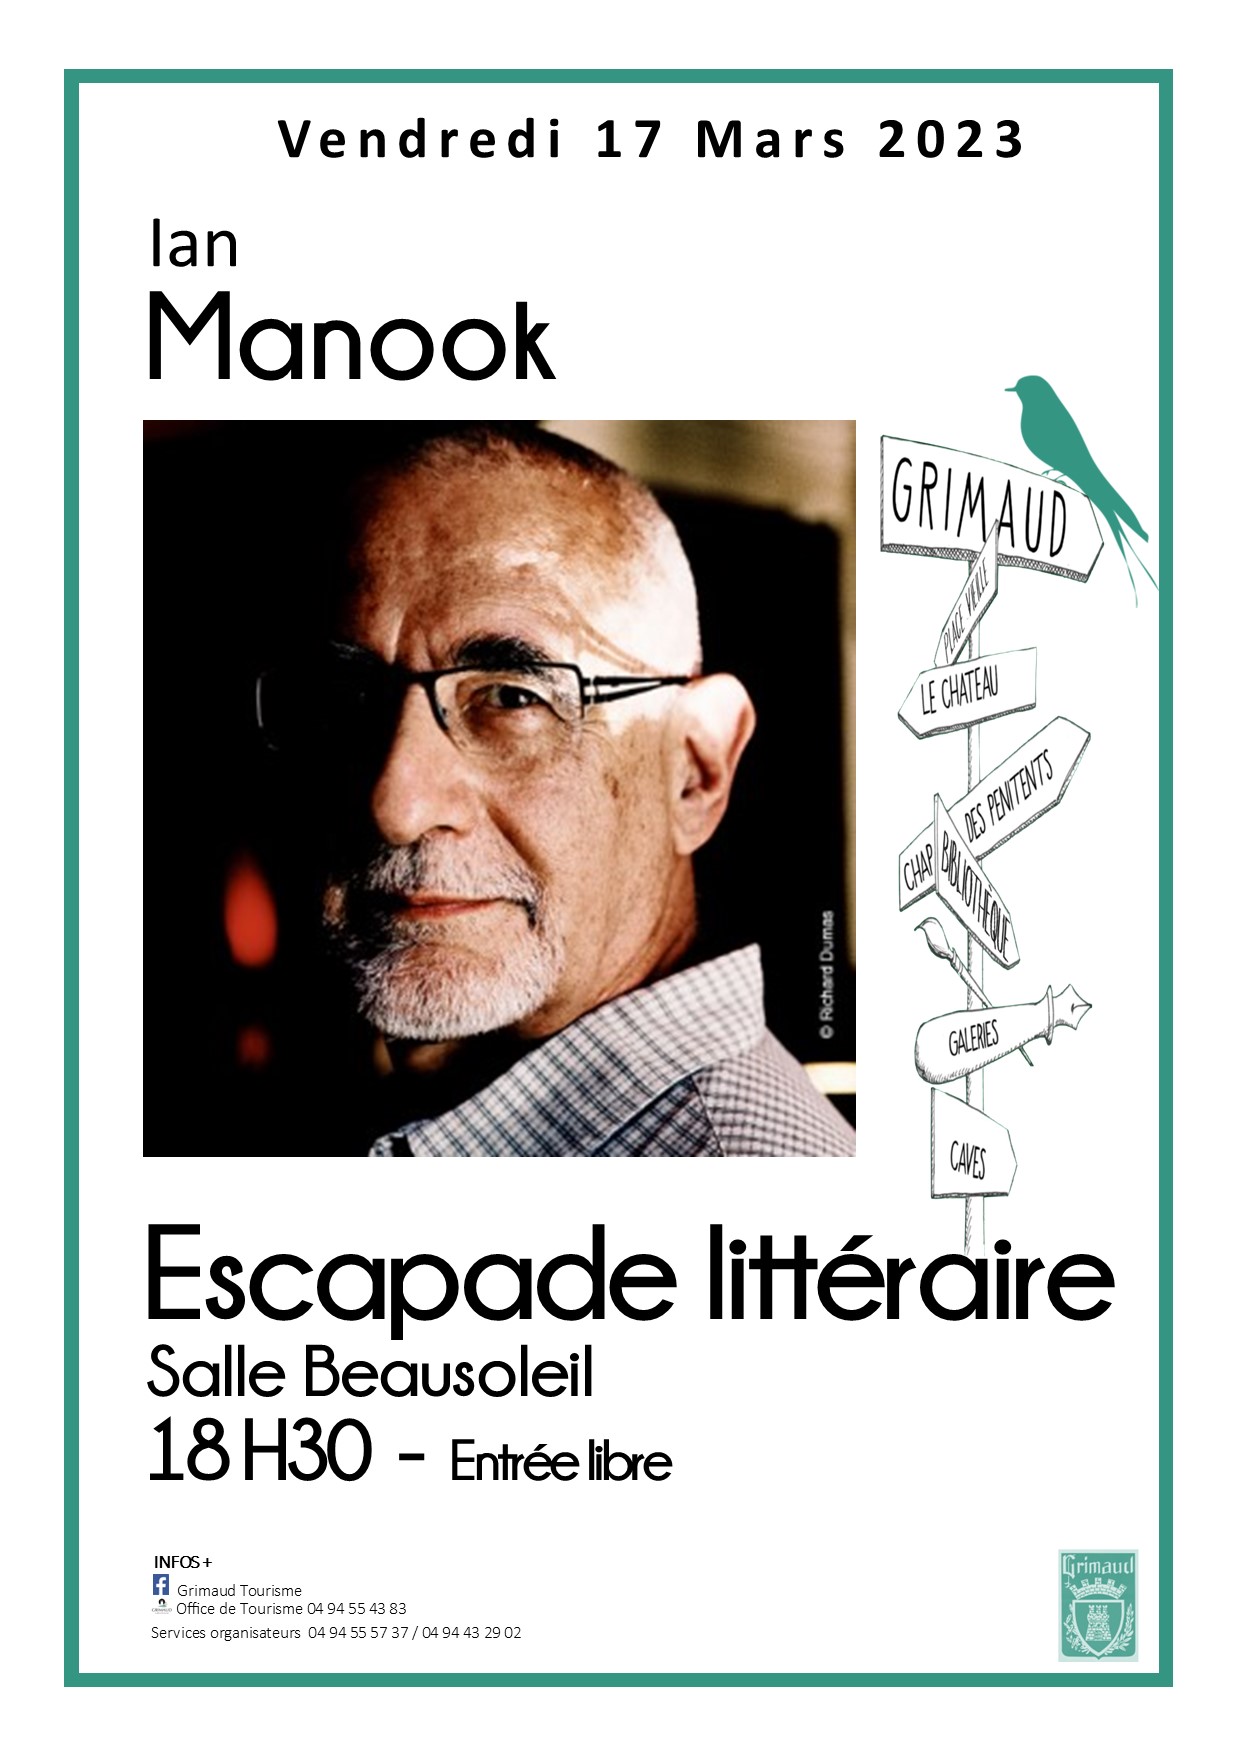 Vendredi 17 mars 2023 : Escapade littéraire avec Ian MANOOK